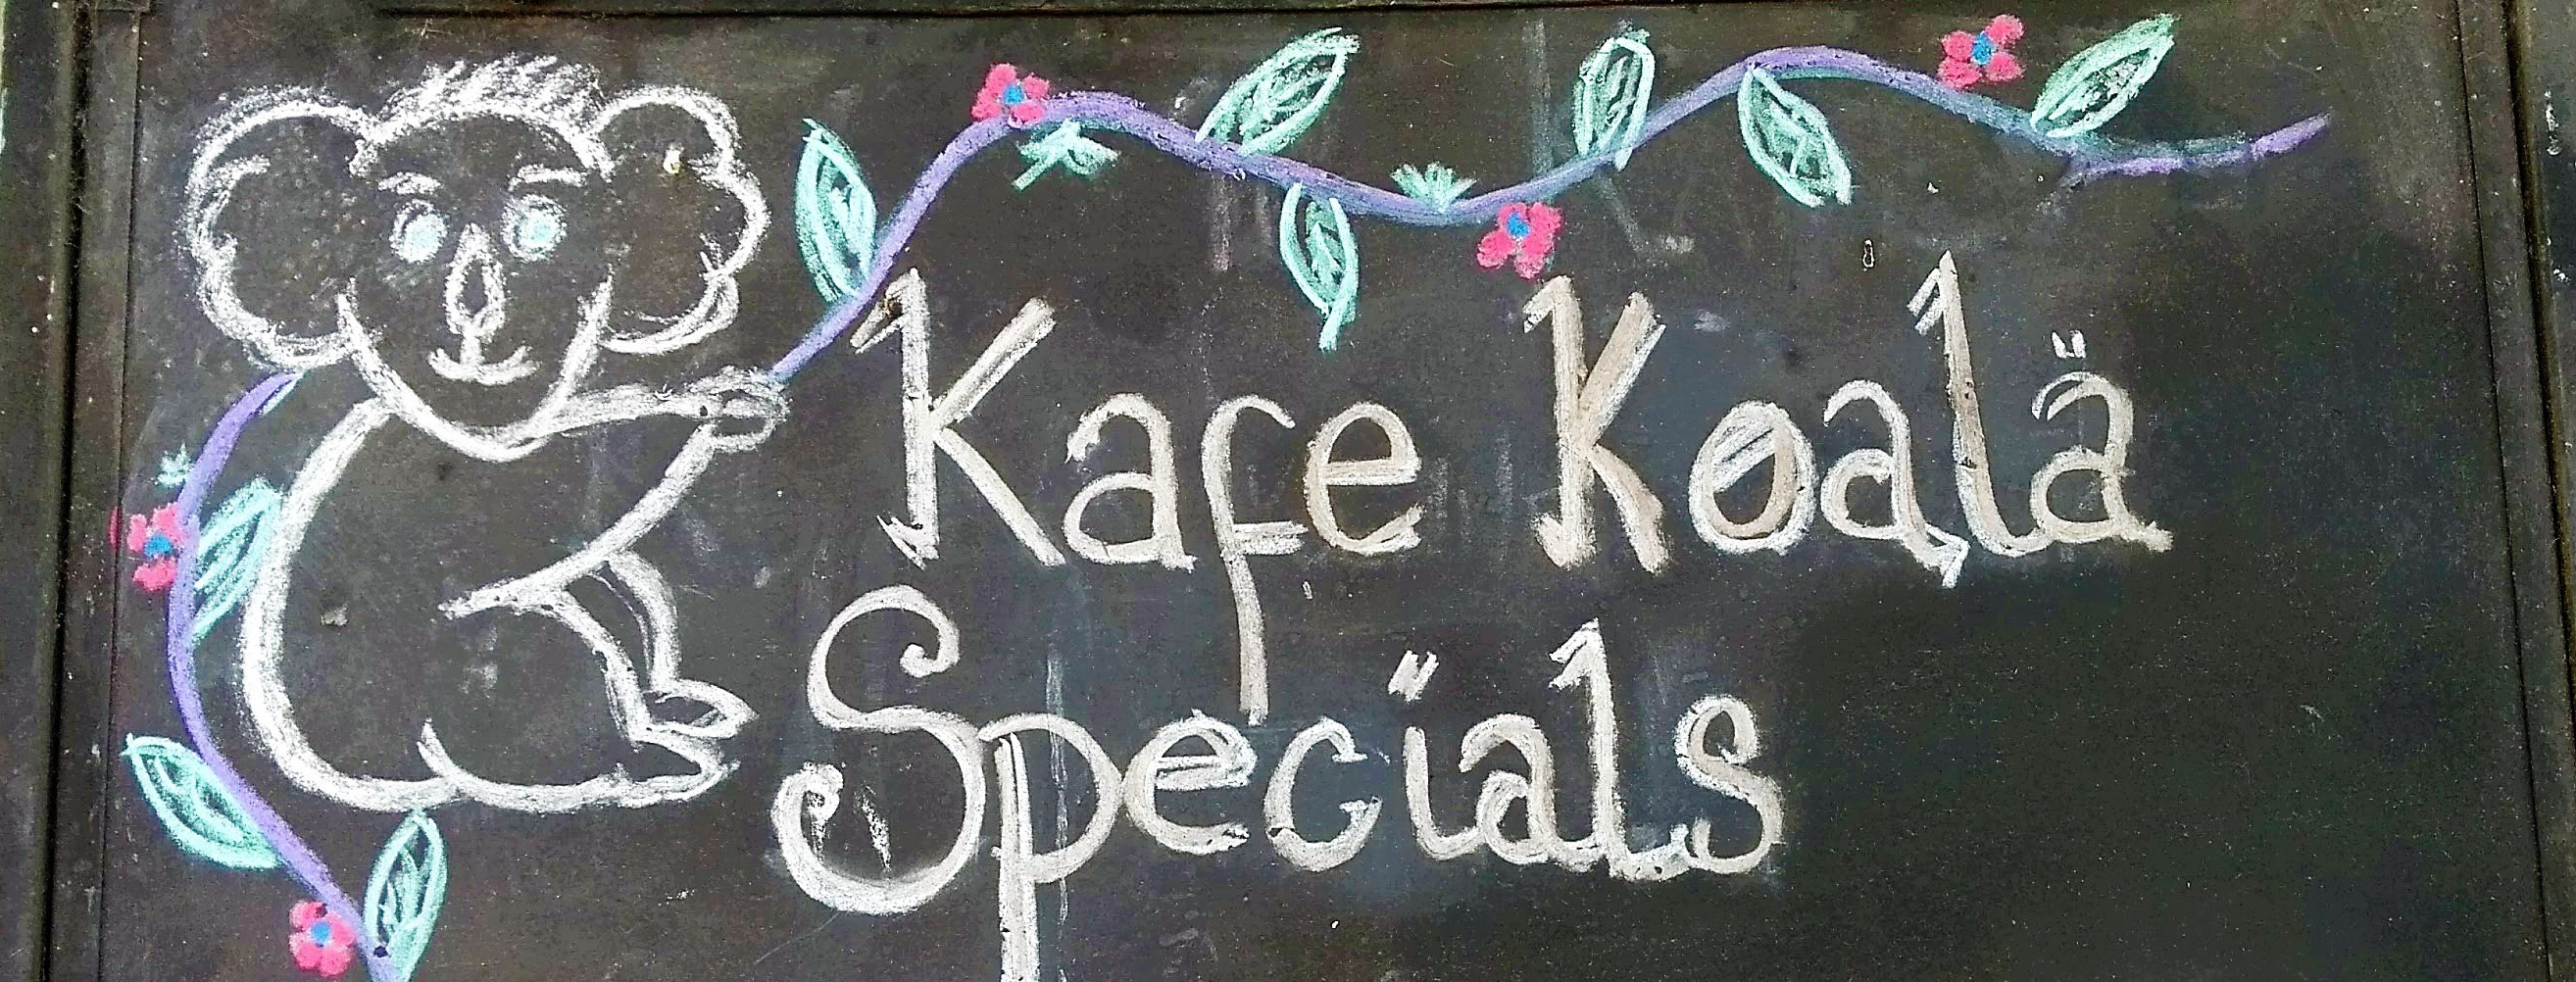 Scritta "Kafe Koala Specials"